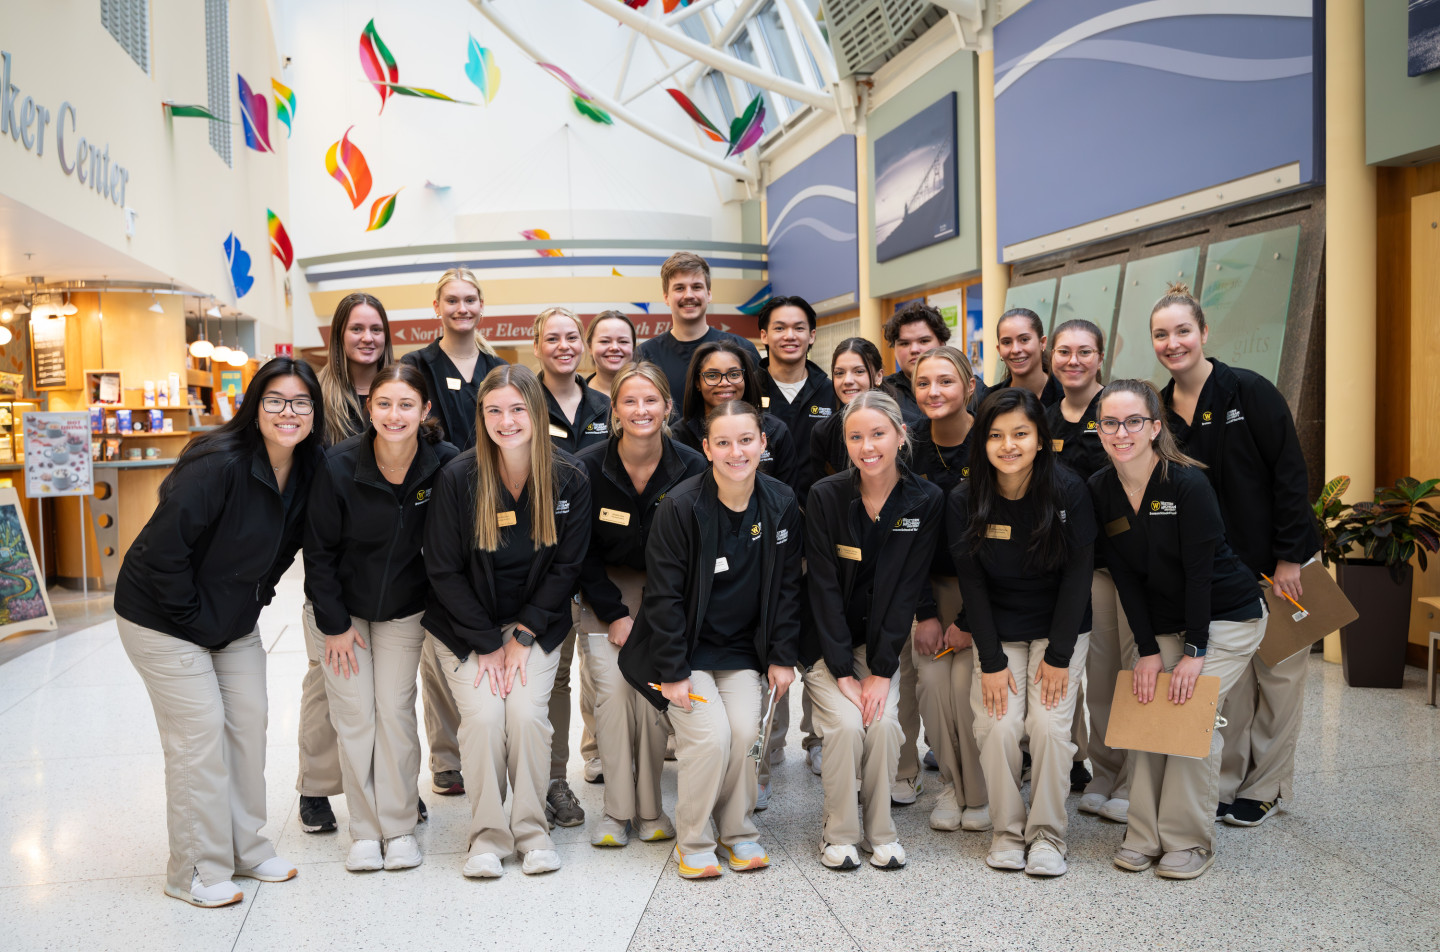 A group photo of WMU nursing students.